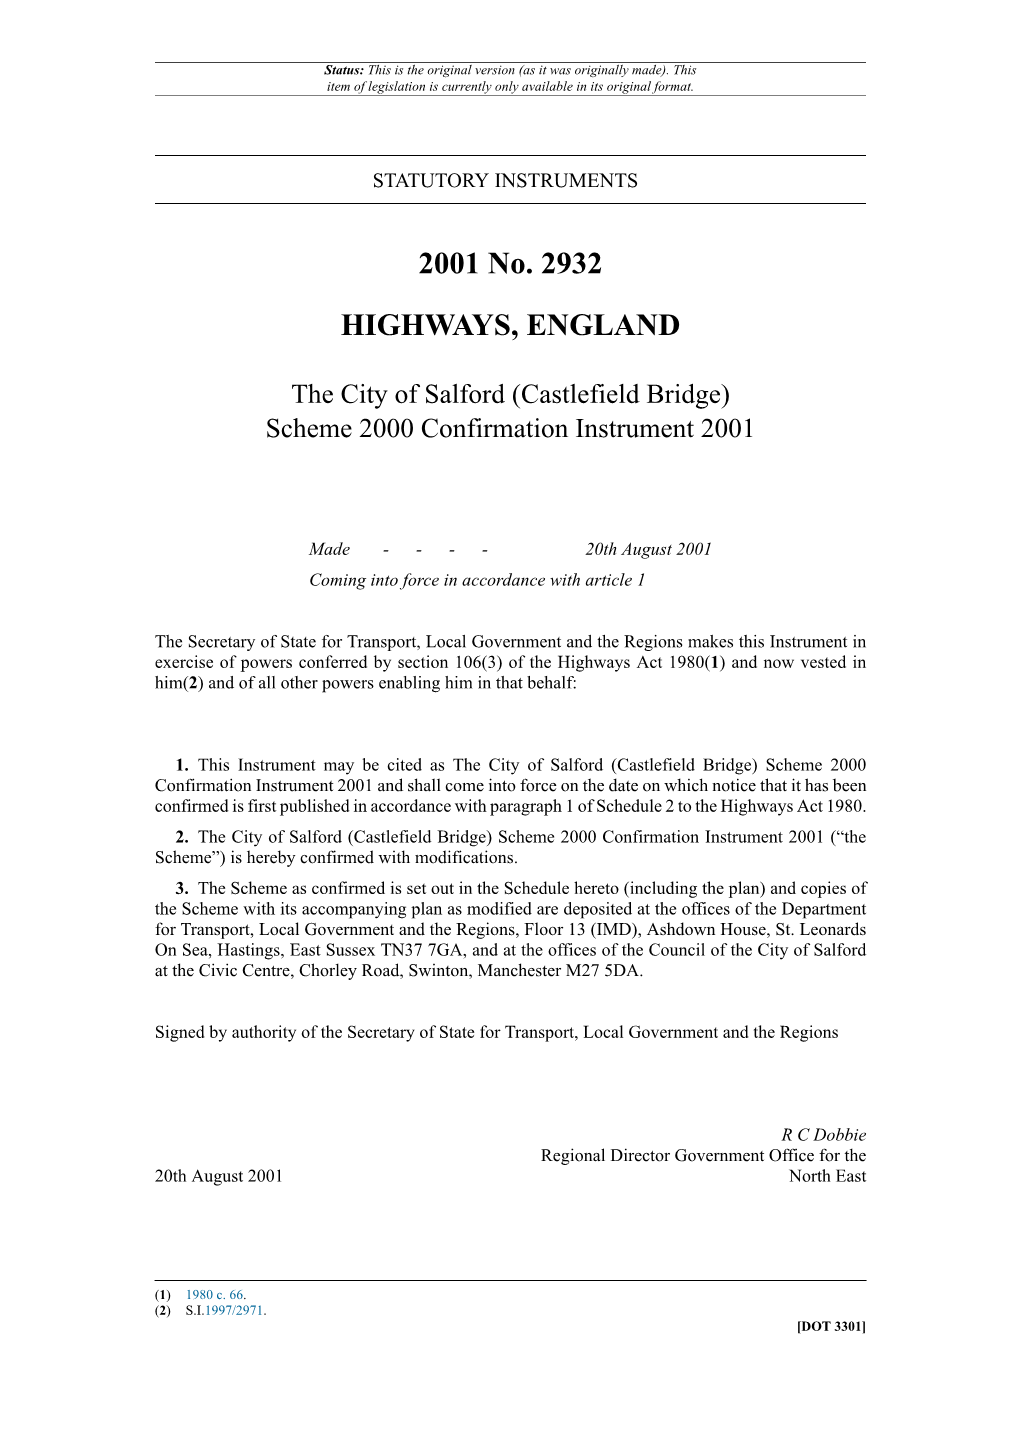 The City of Salford (Castlefield Bridge) Scheme 2000 Confirmation Instrument 2001